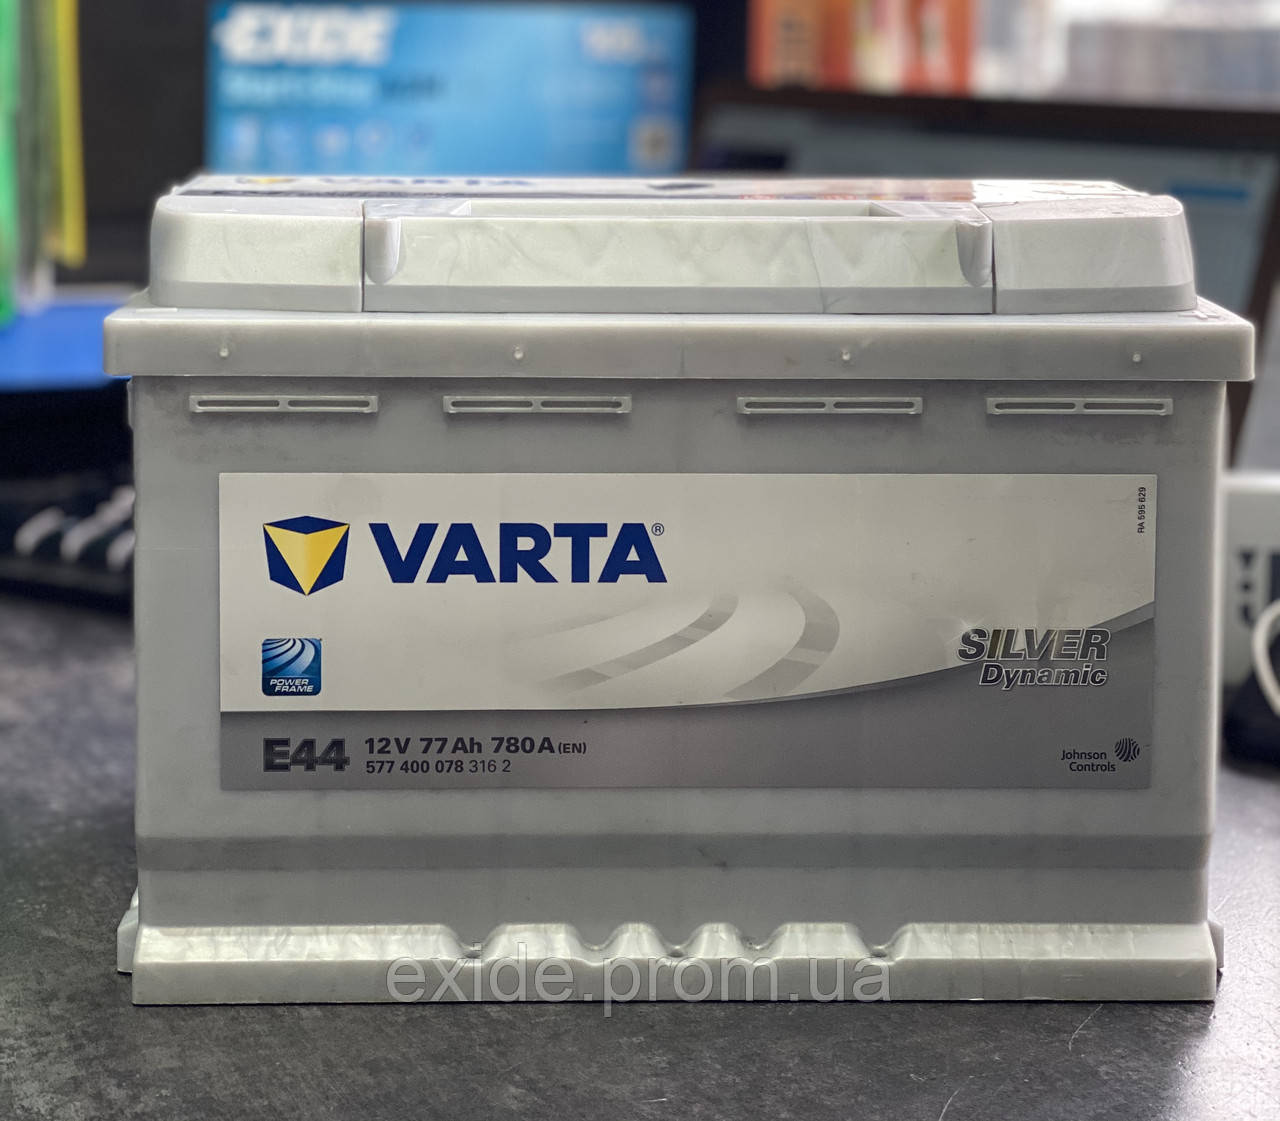 Varta Silver Dynamic E44 12V 77Ah 780A/EN Autobatterie -batcar.de